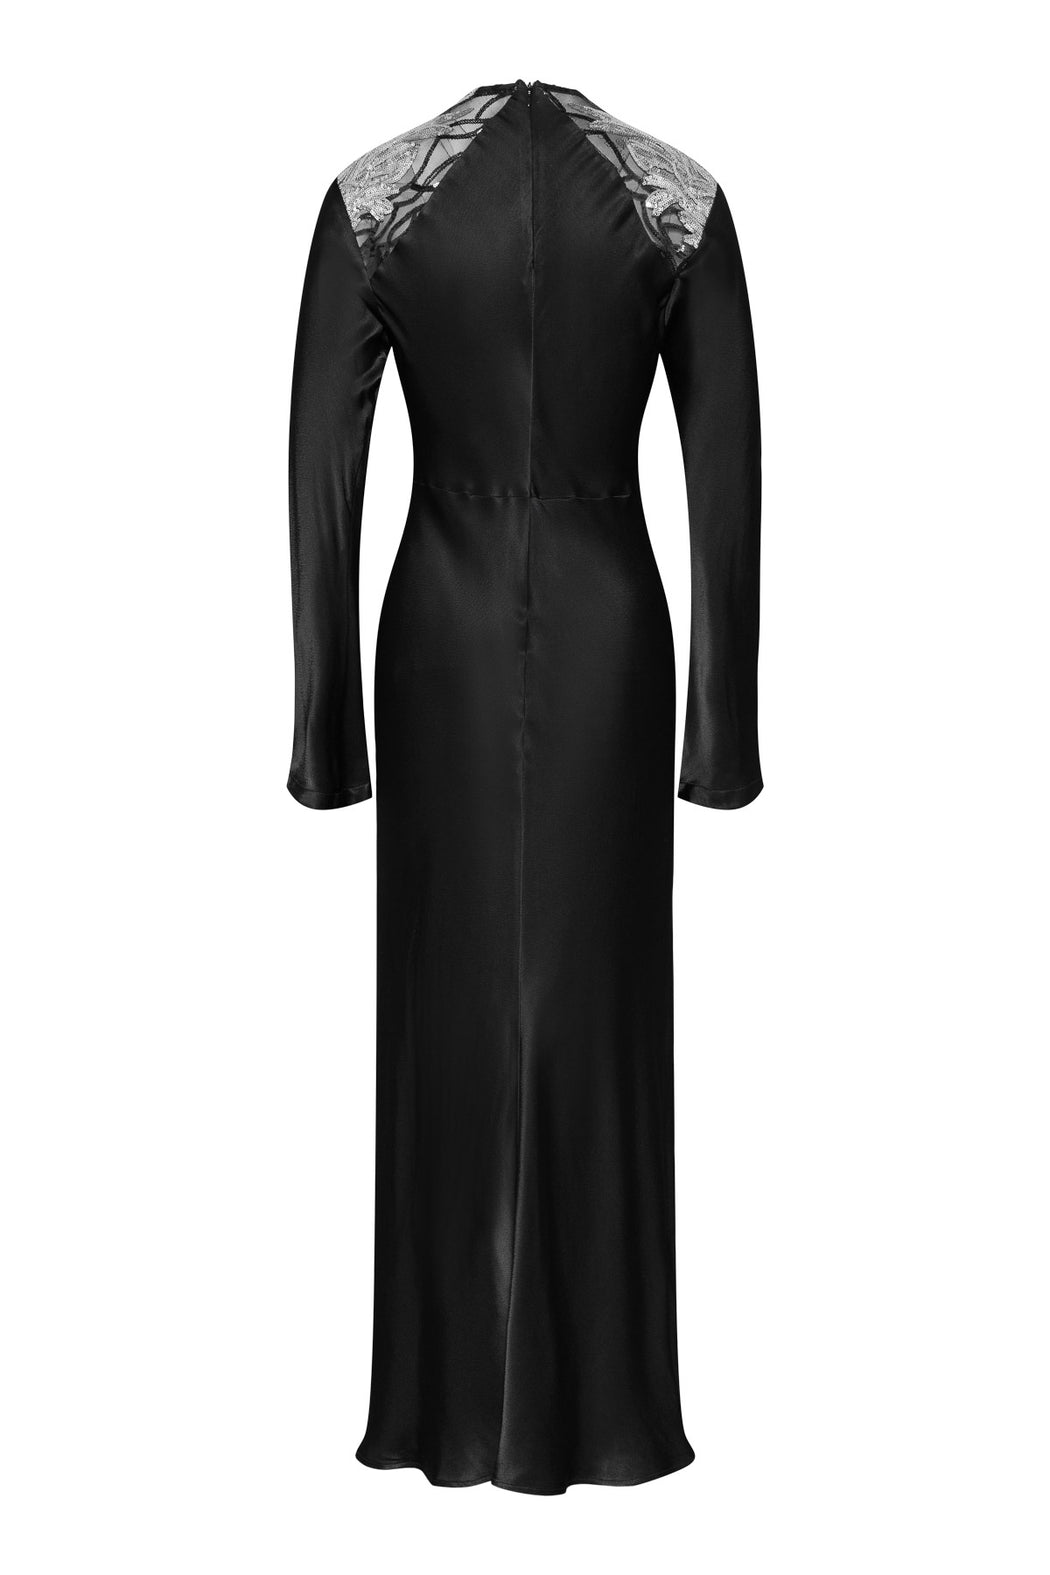 Envelope1976 Envelope dress - Rayon Dress Black